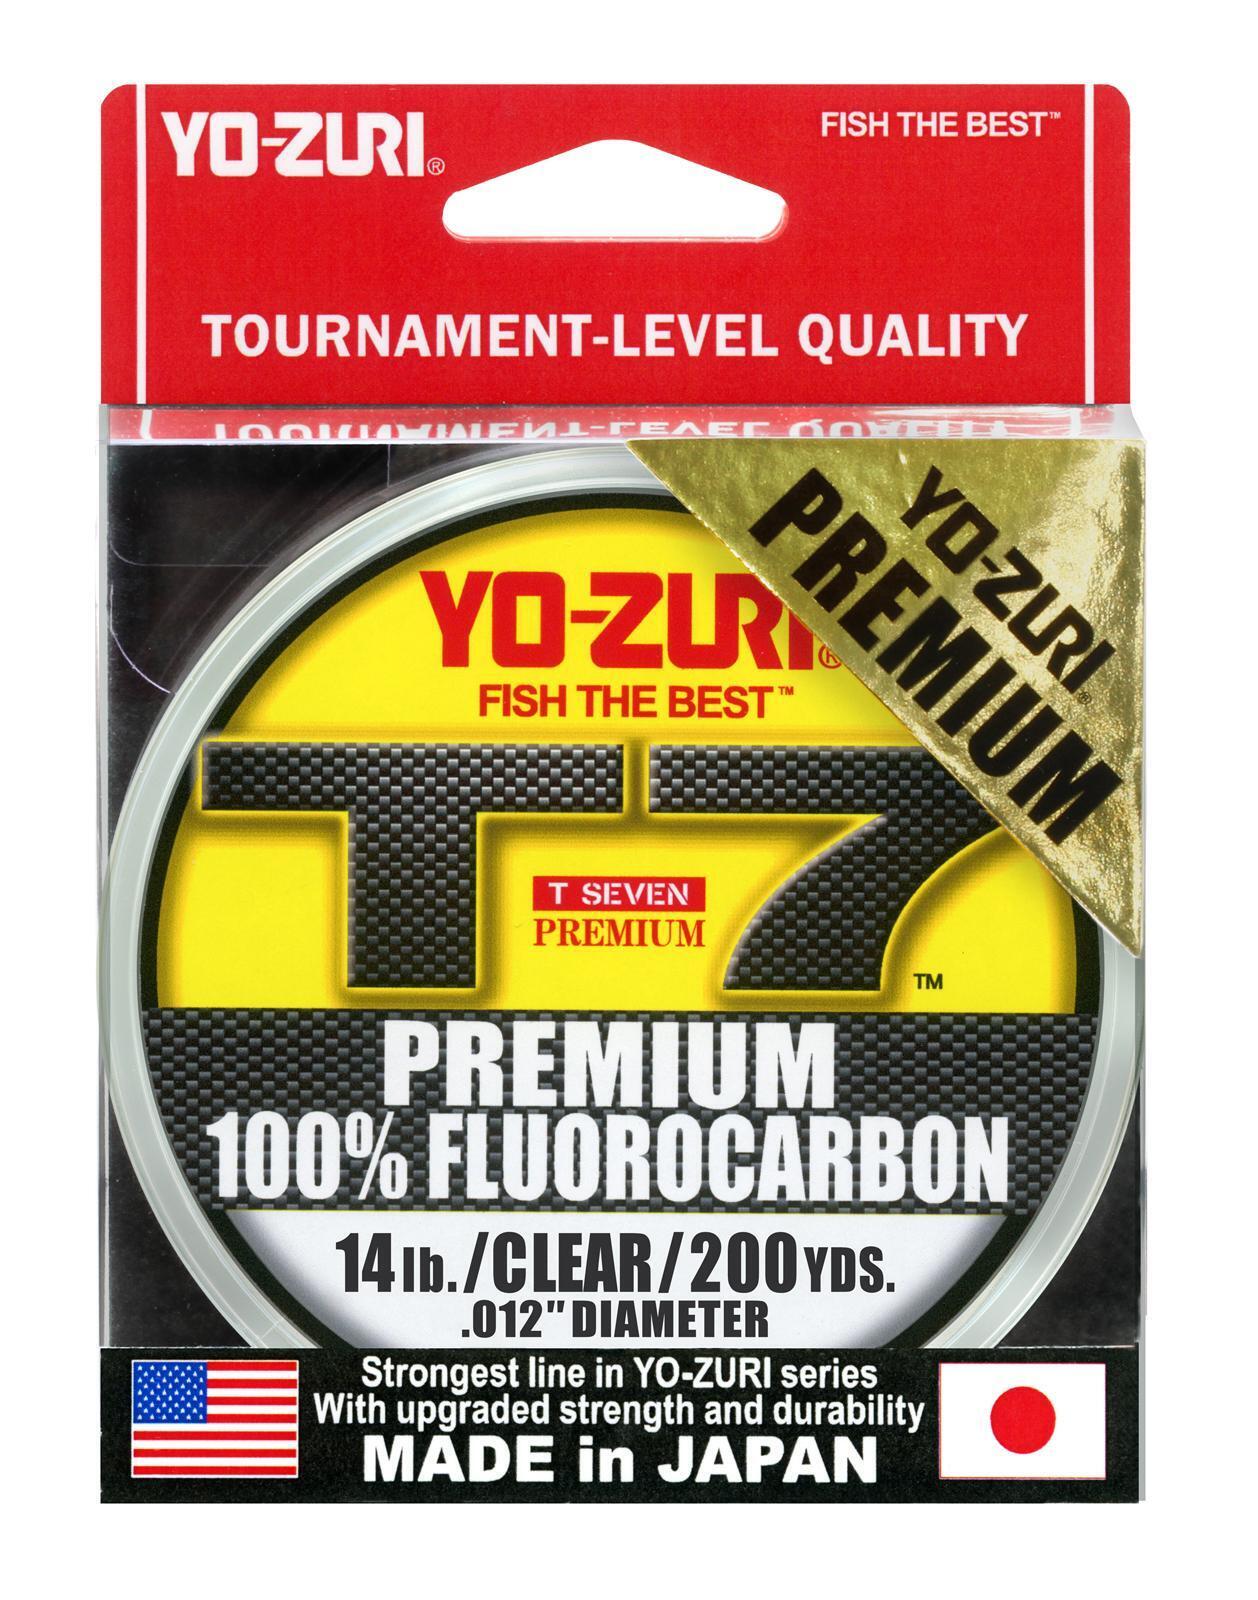 YO-ZURI HYBRID Fluorocarbon Fishing Line 20lb/600yd CLEAR NEW! FREE USA  SHIP!